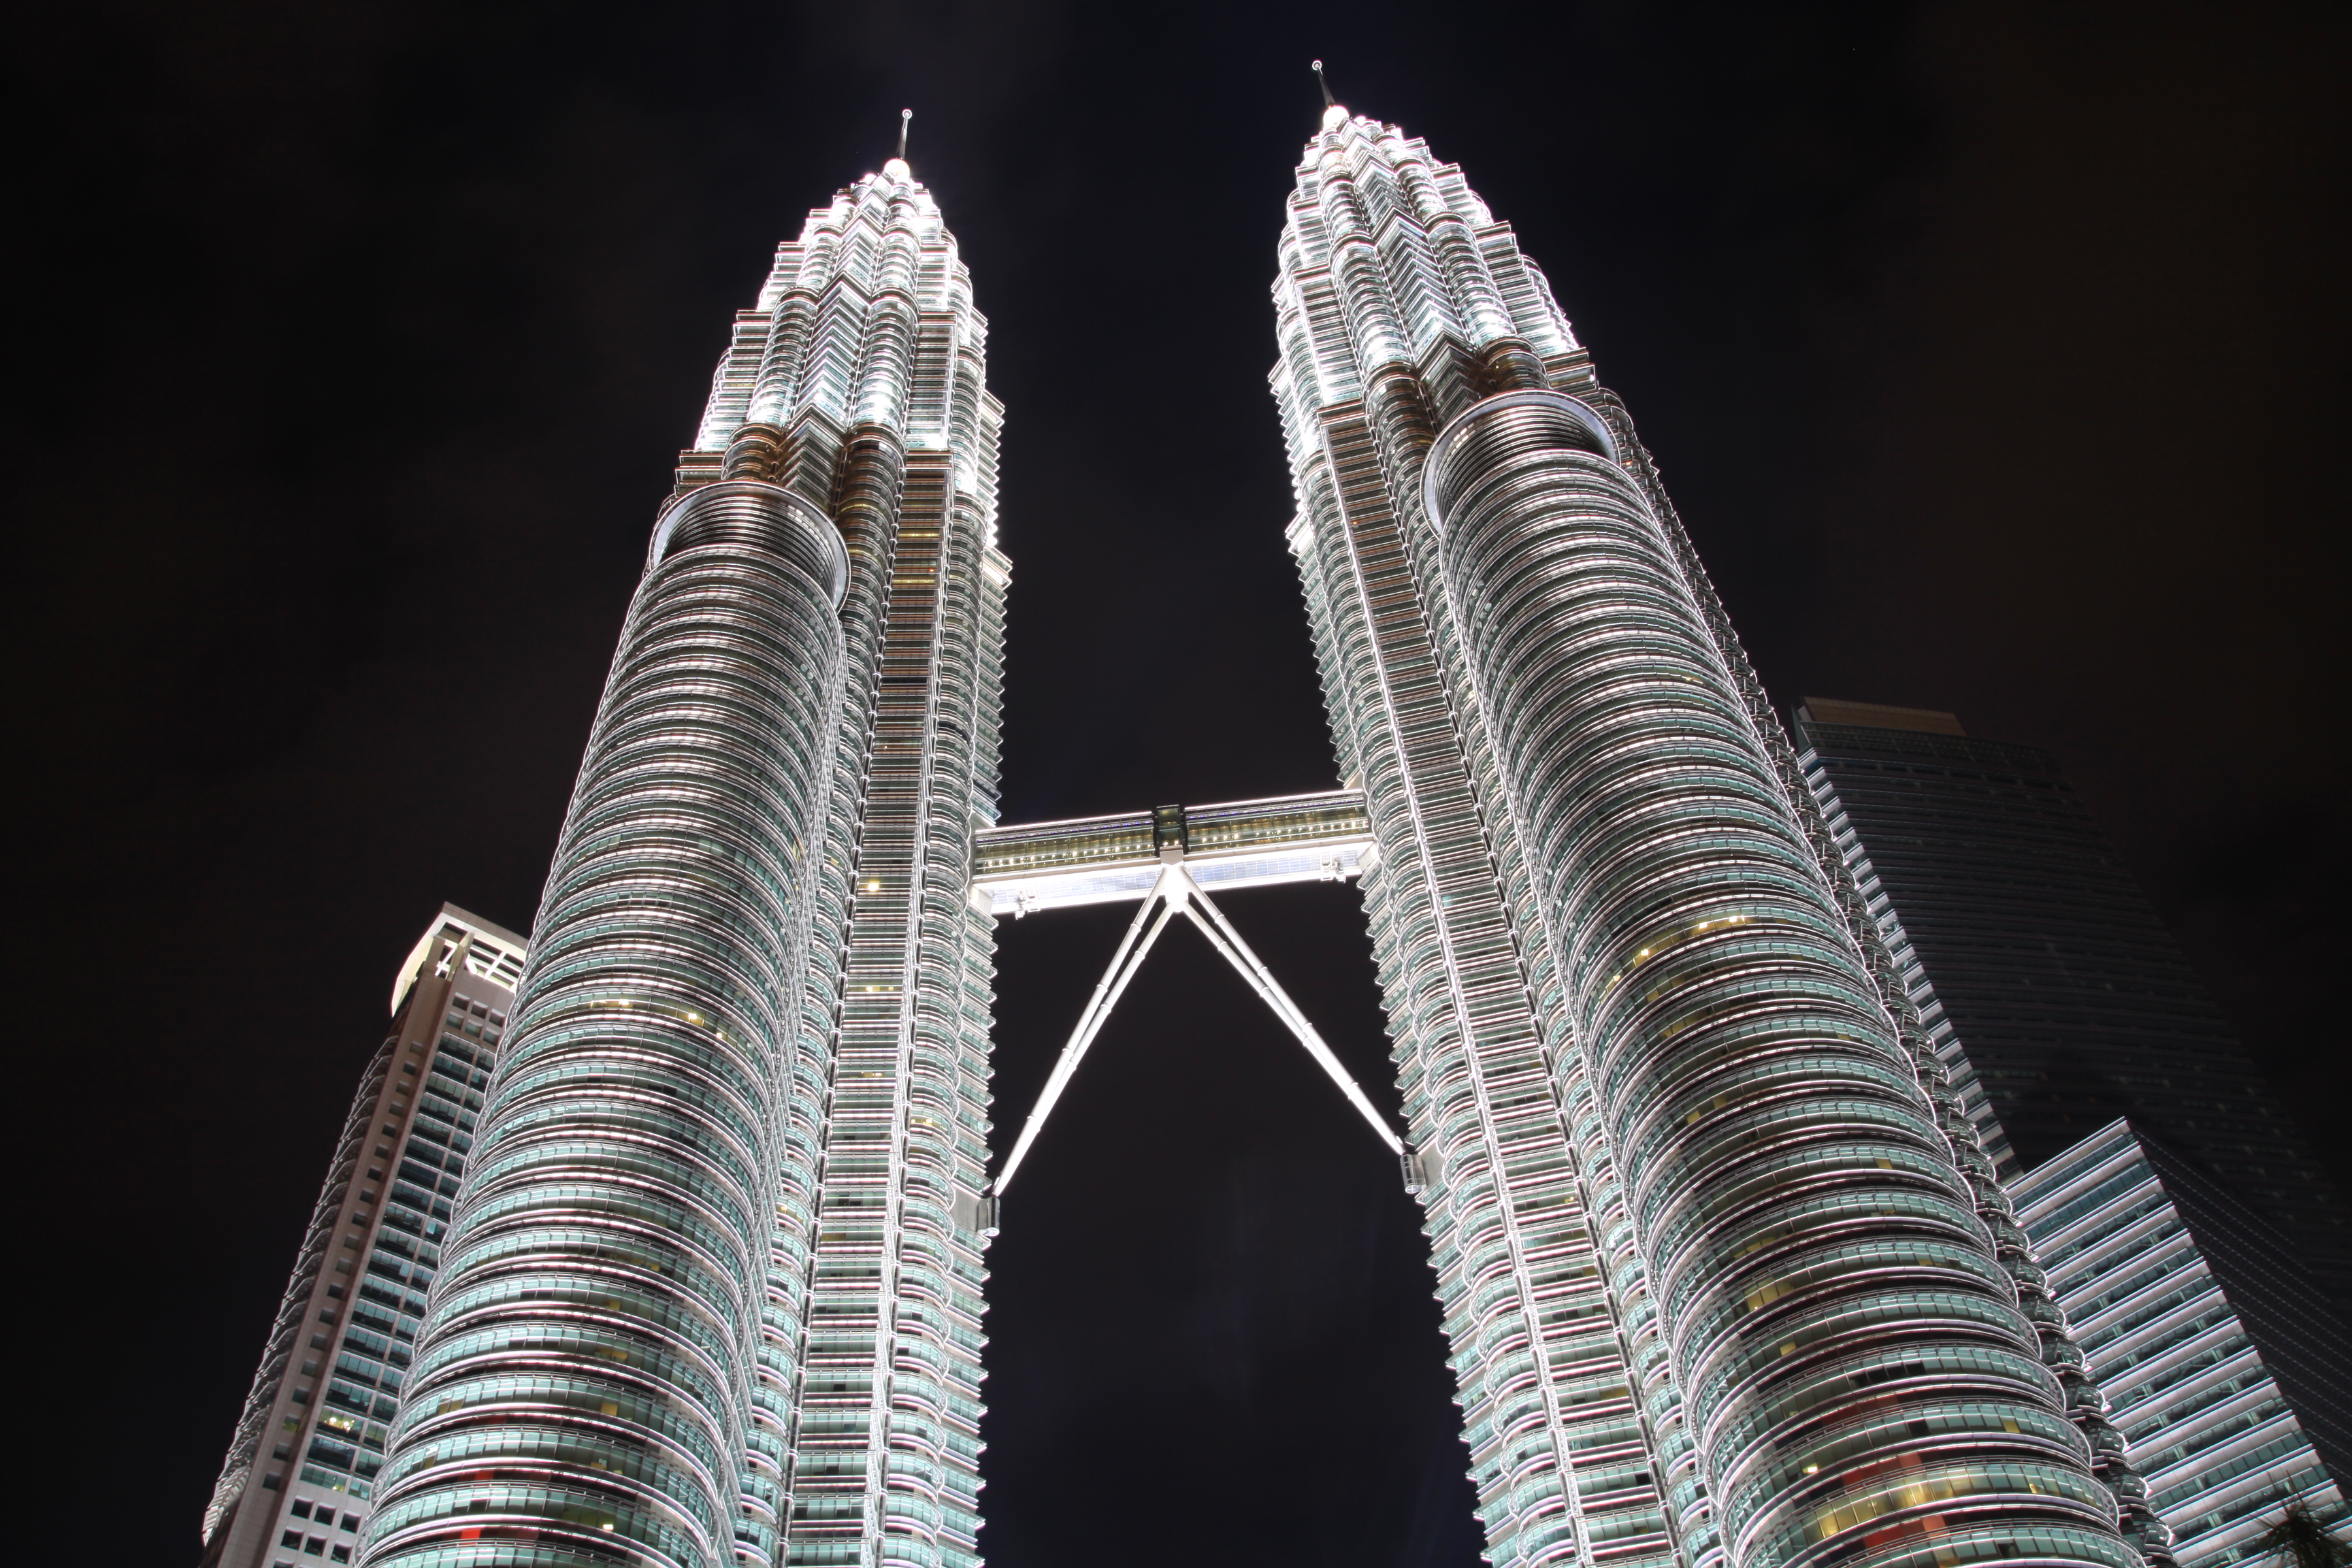 Petronas Towers-Must-see